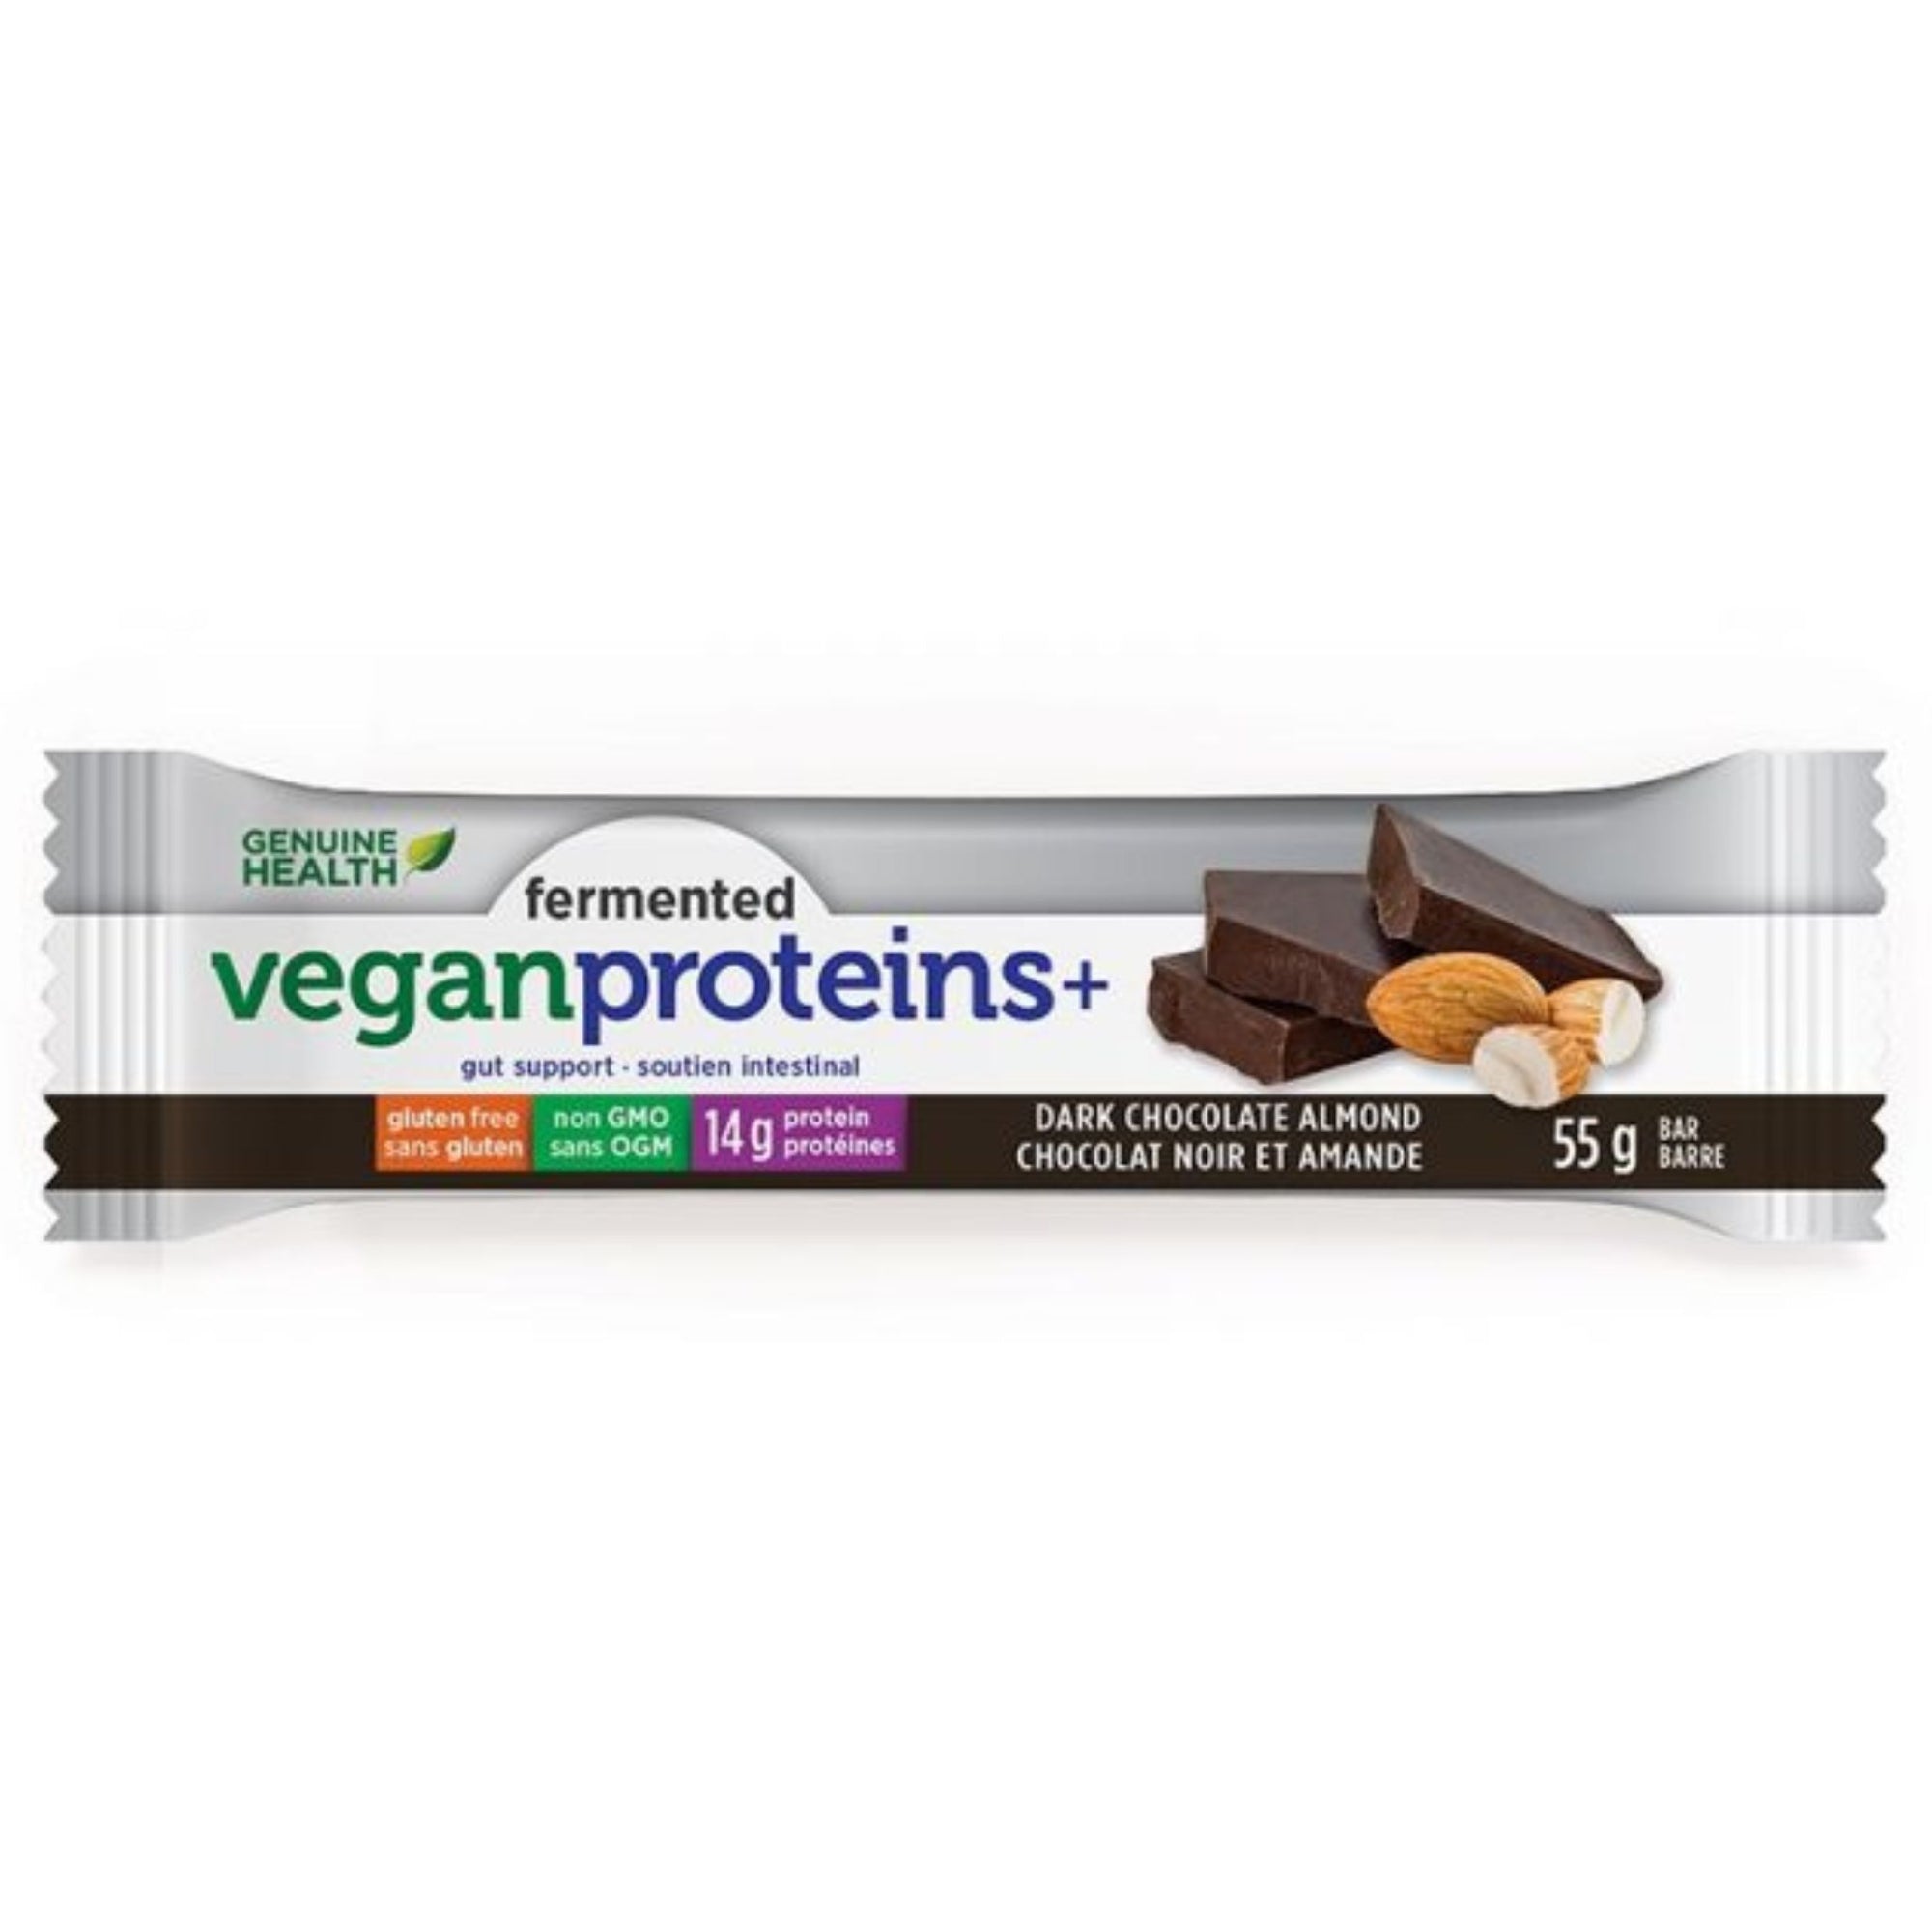 Genuine Health Fermented Vegan Proteins+ Bar - gut support - Older packaging, same product - Each bar is 55g